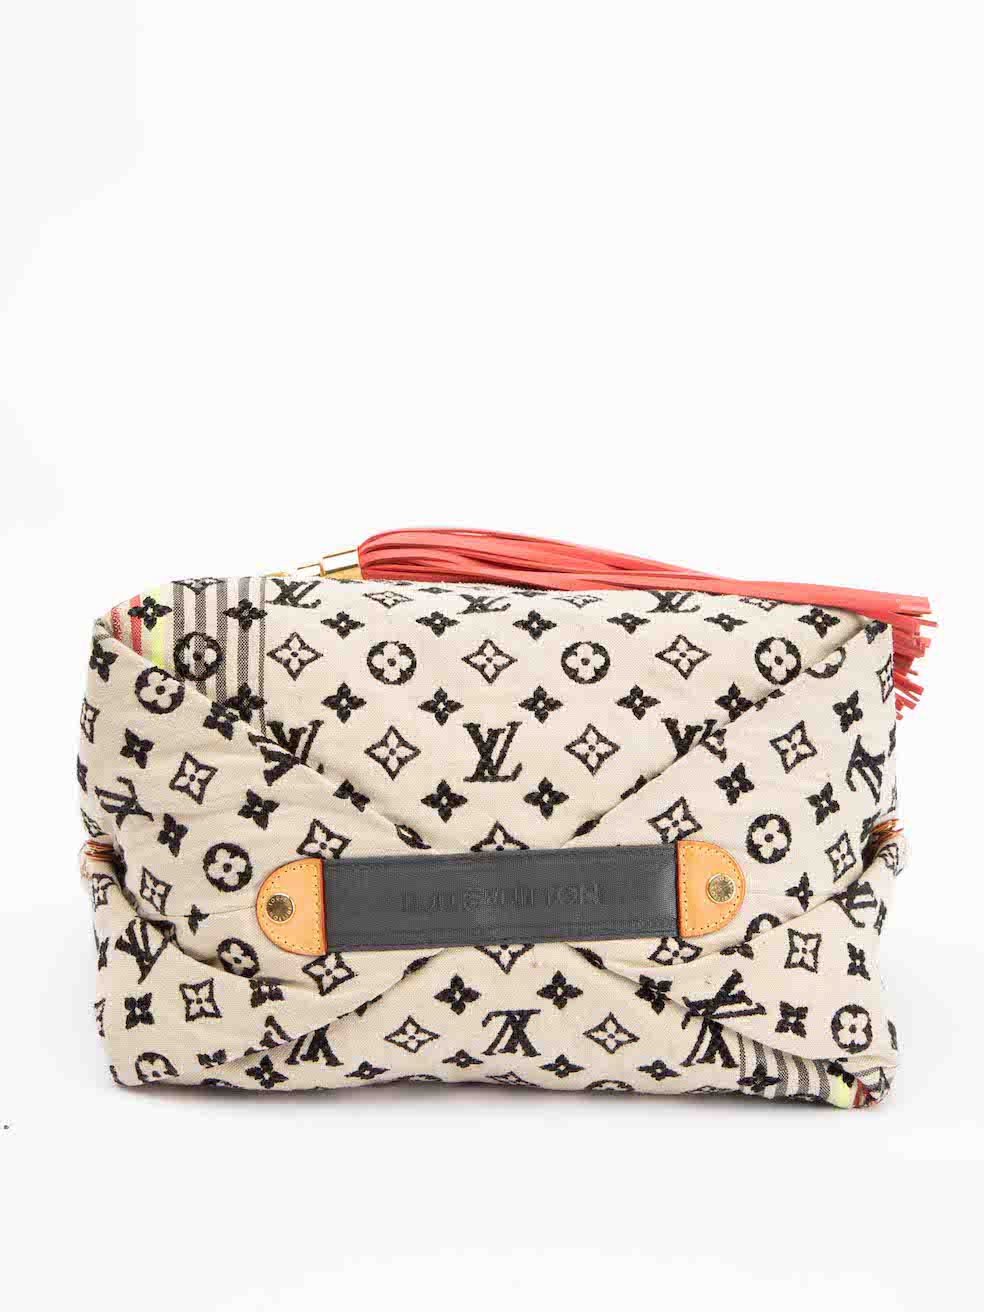 Louis Vuitton Women's Limited Edition 2010 Cheche Bohemian Bag at